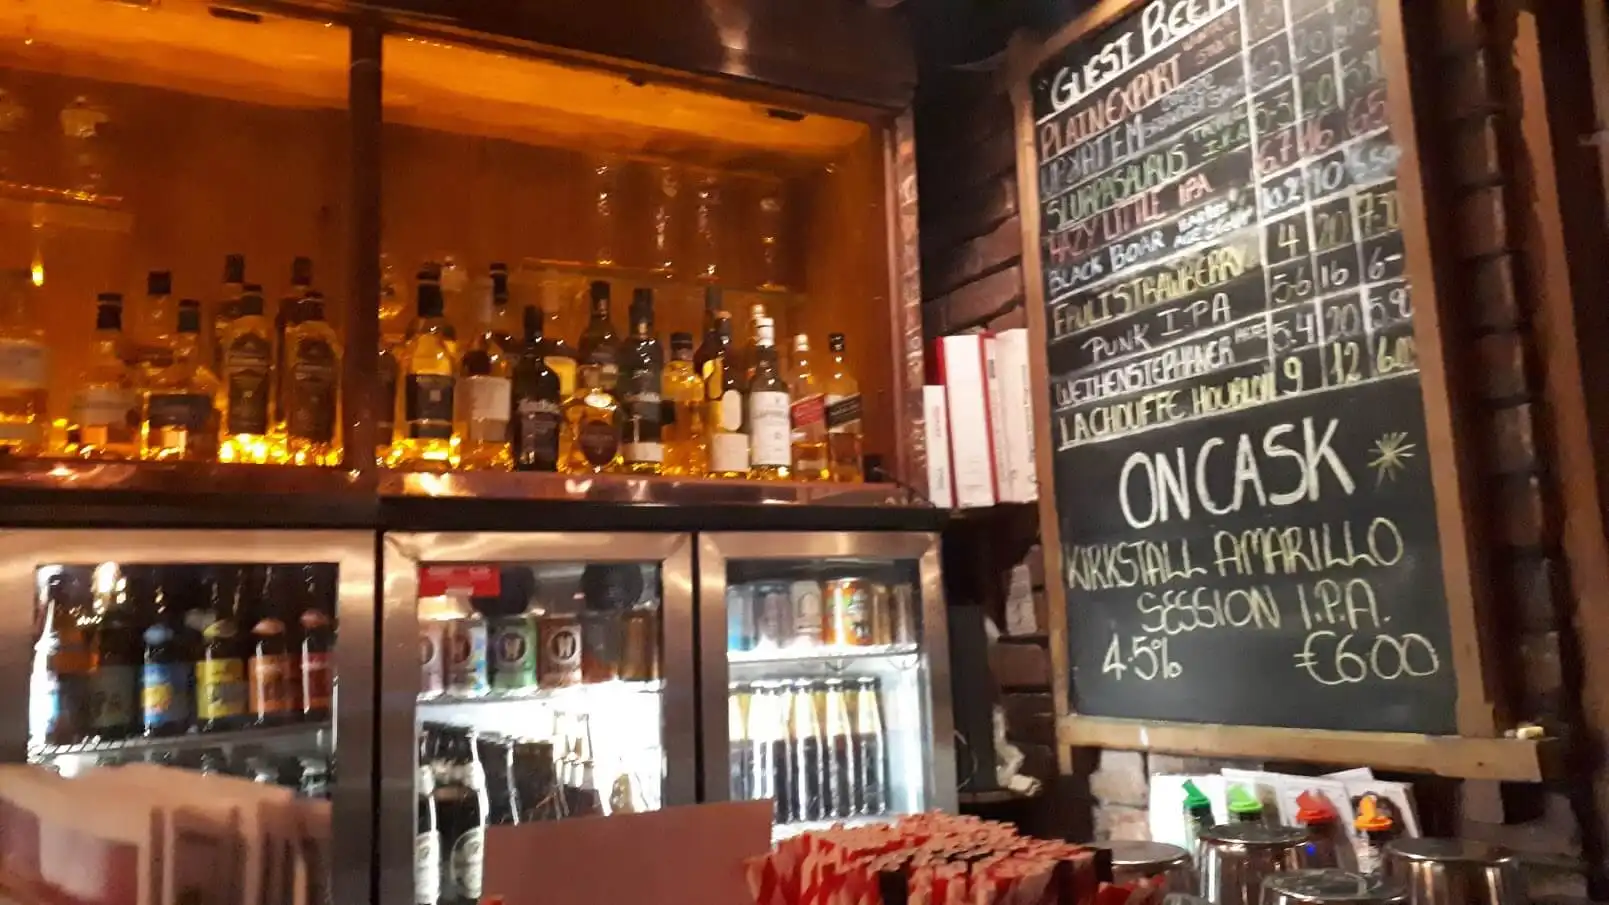 Porterhouse pub in Dublin